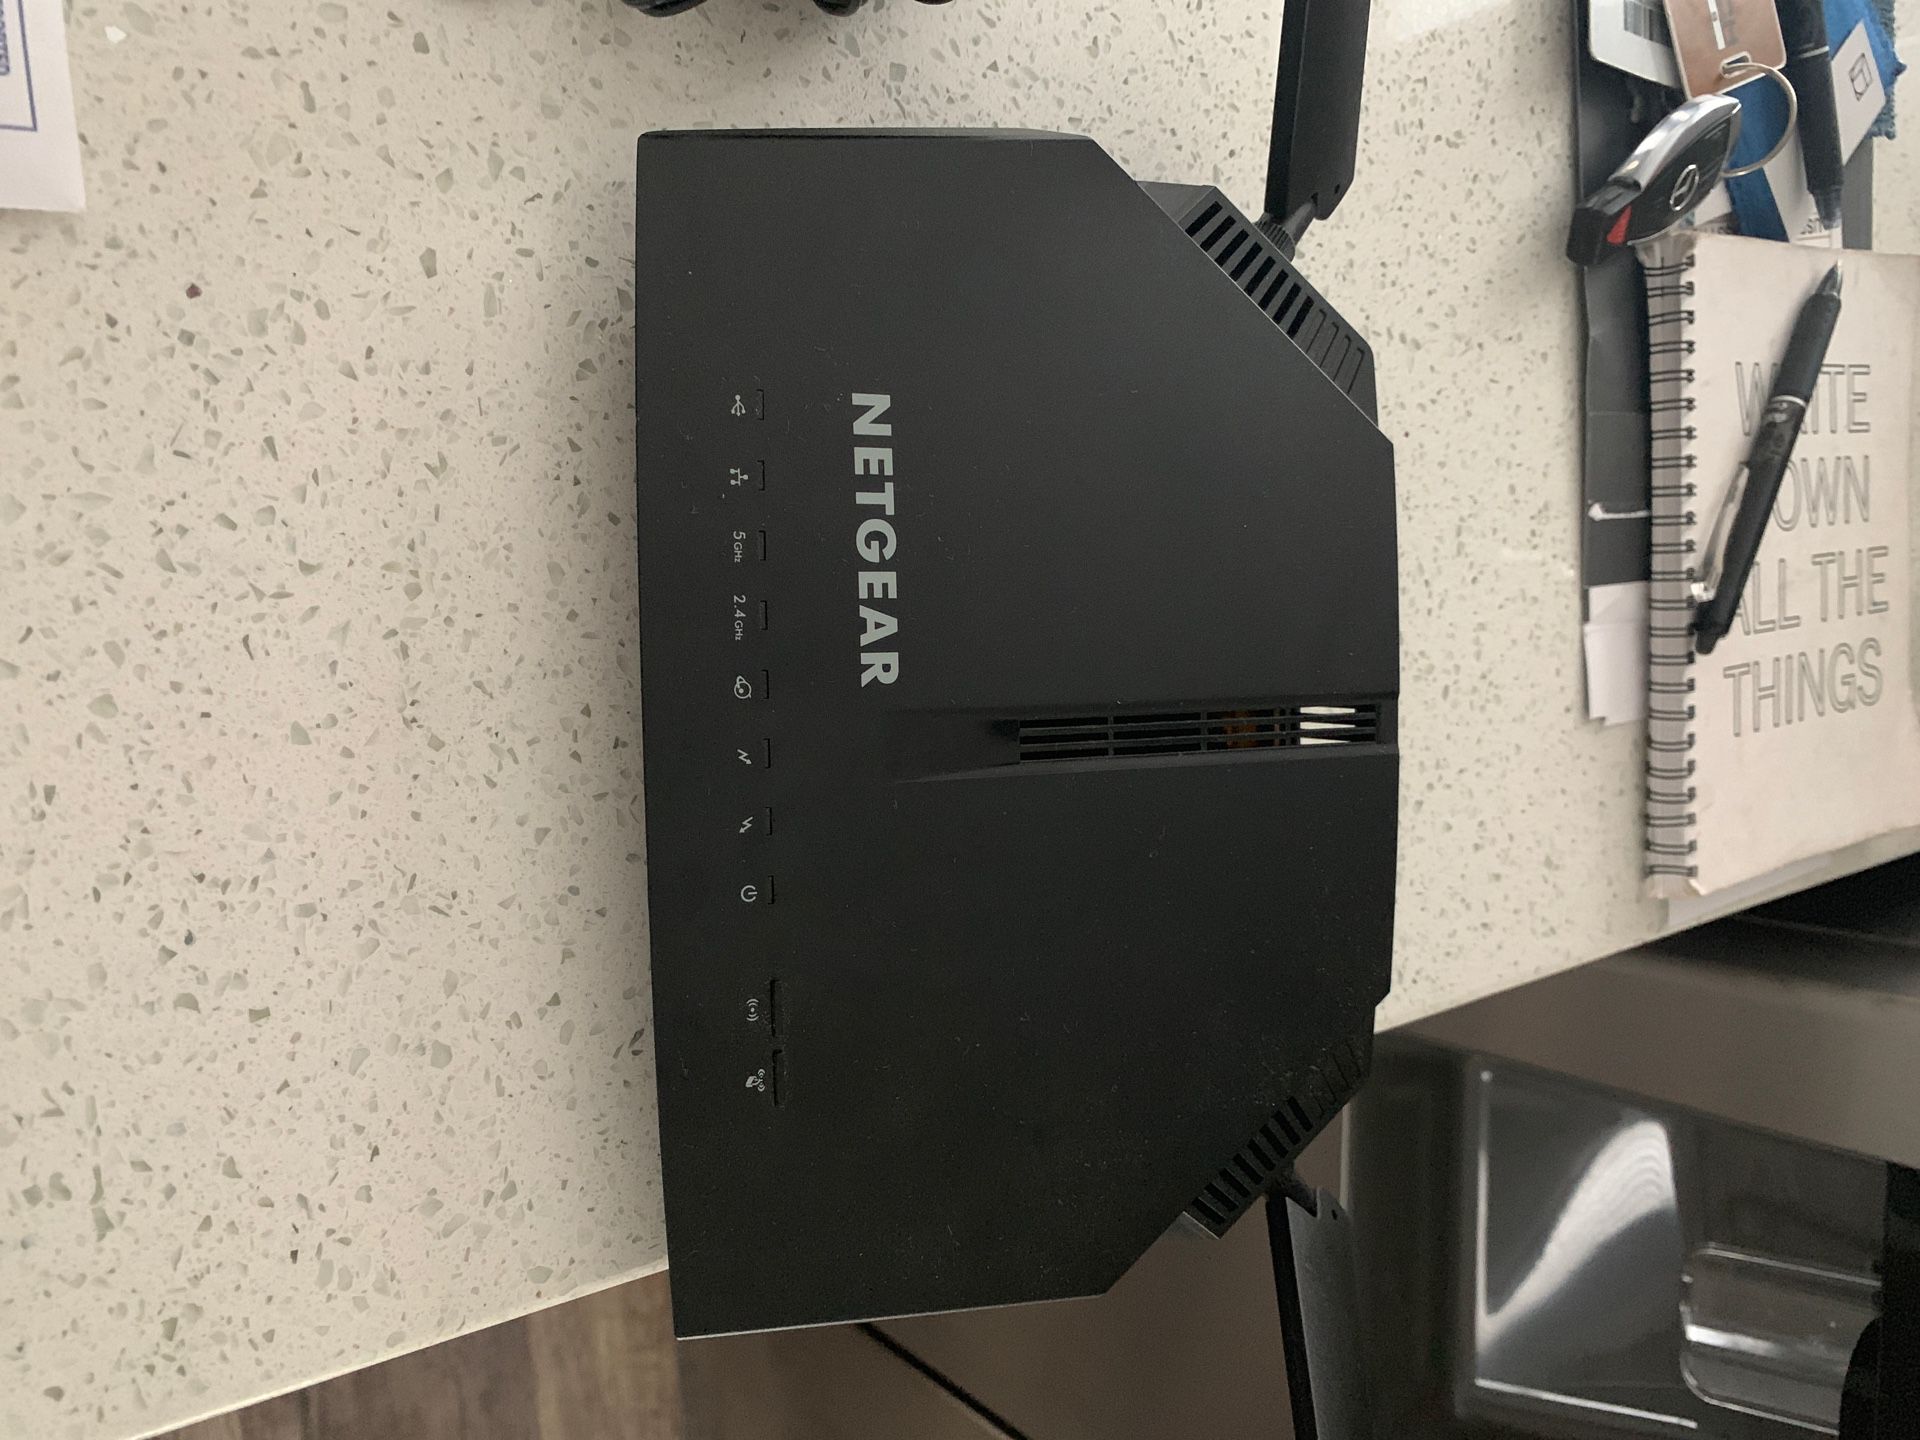 Netgear AC1200 WiFi Router